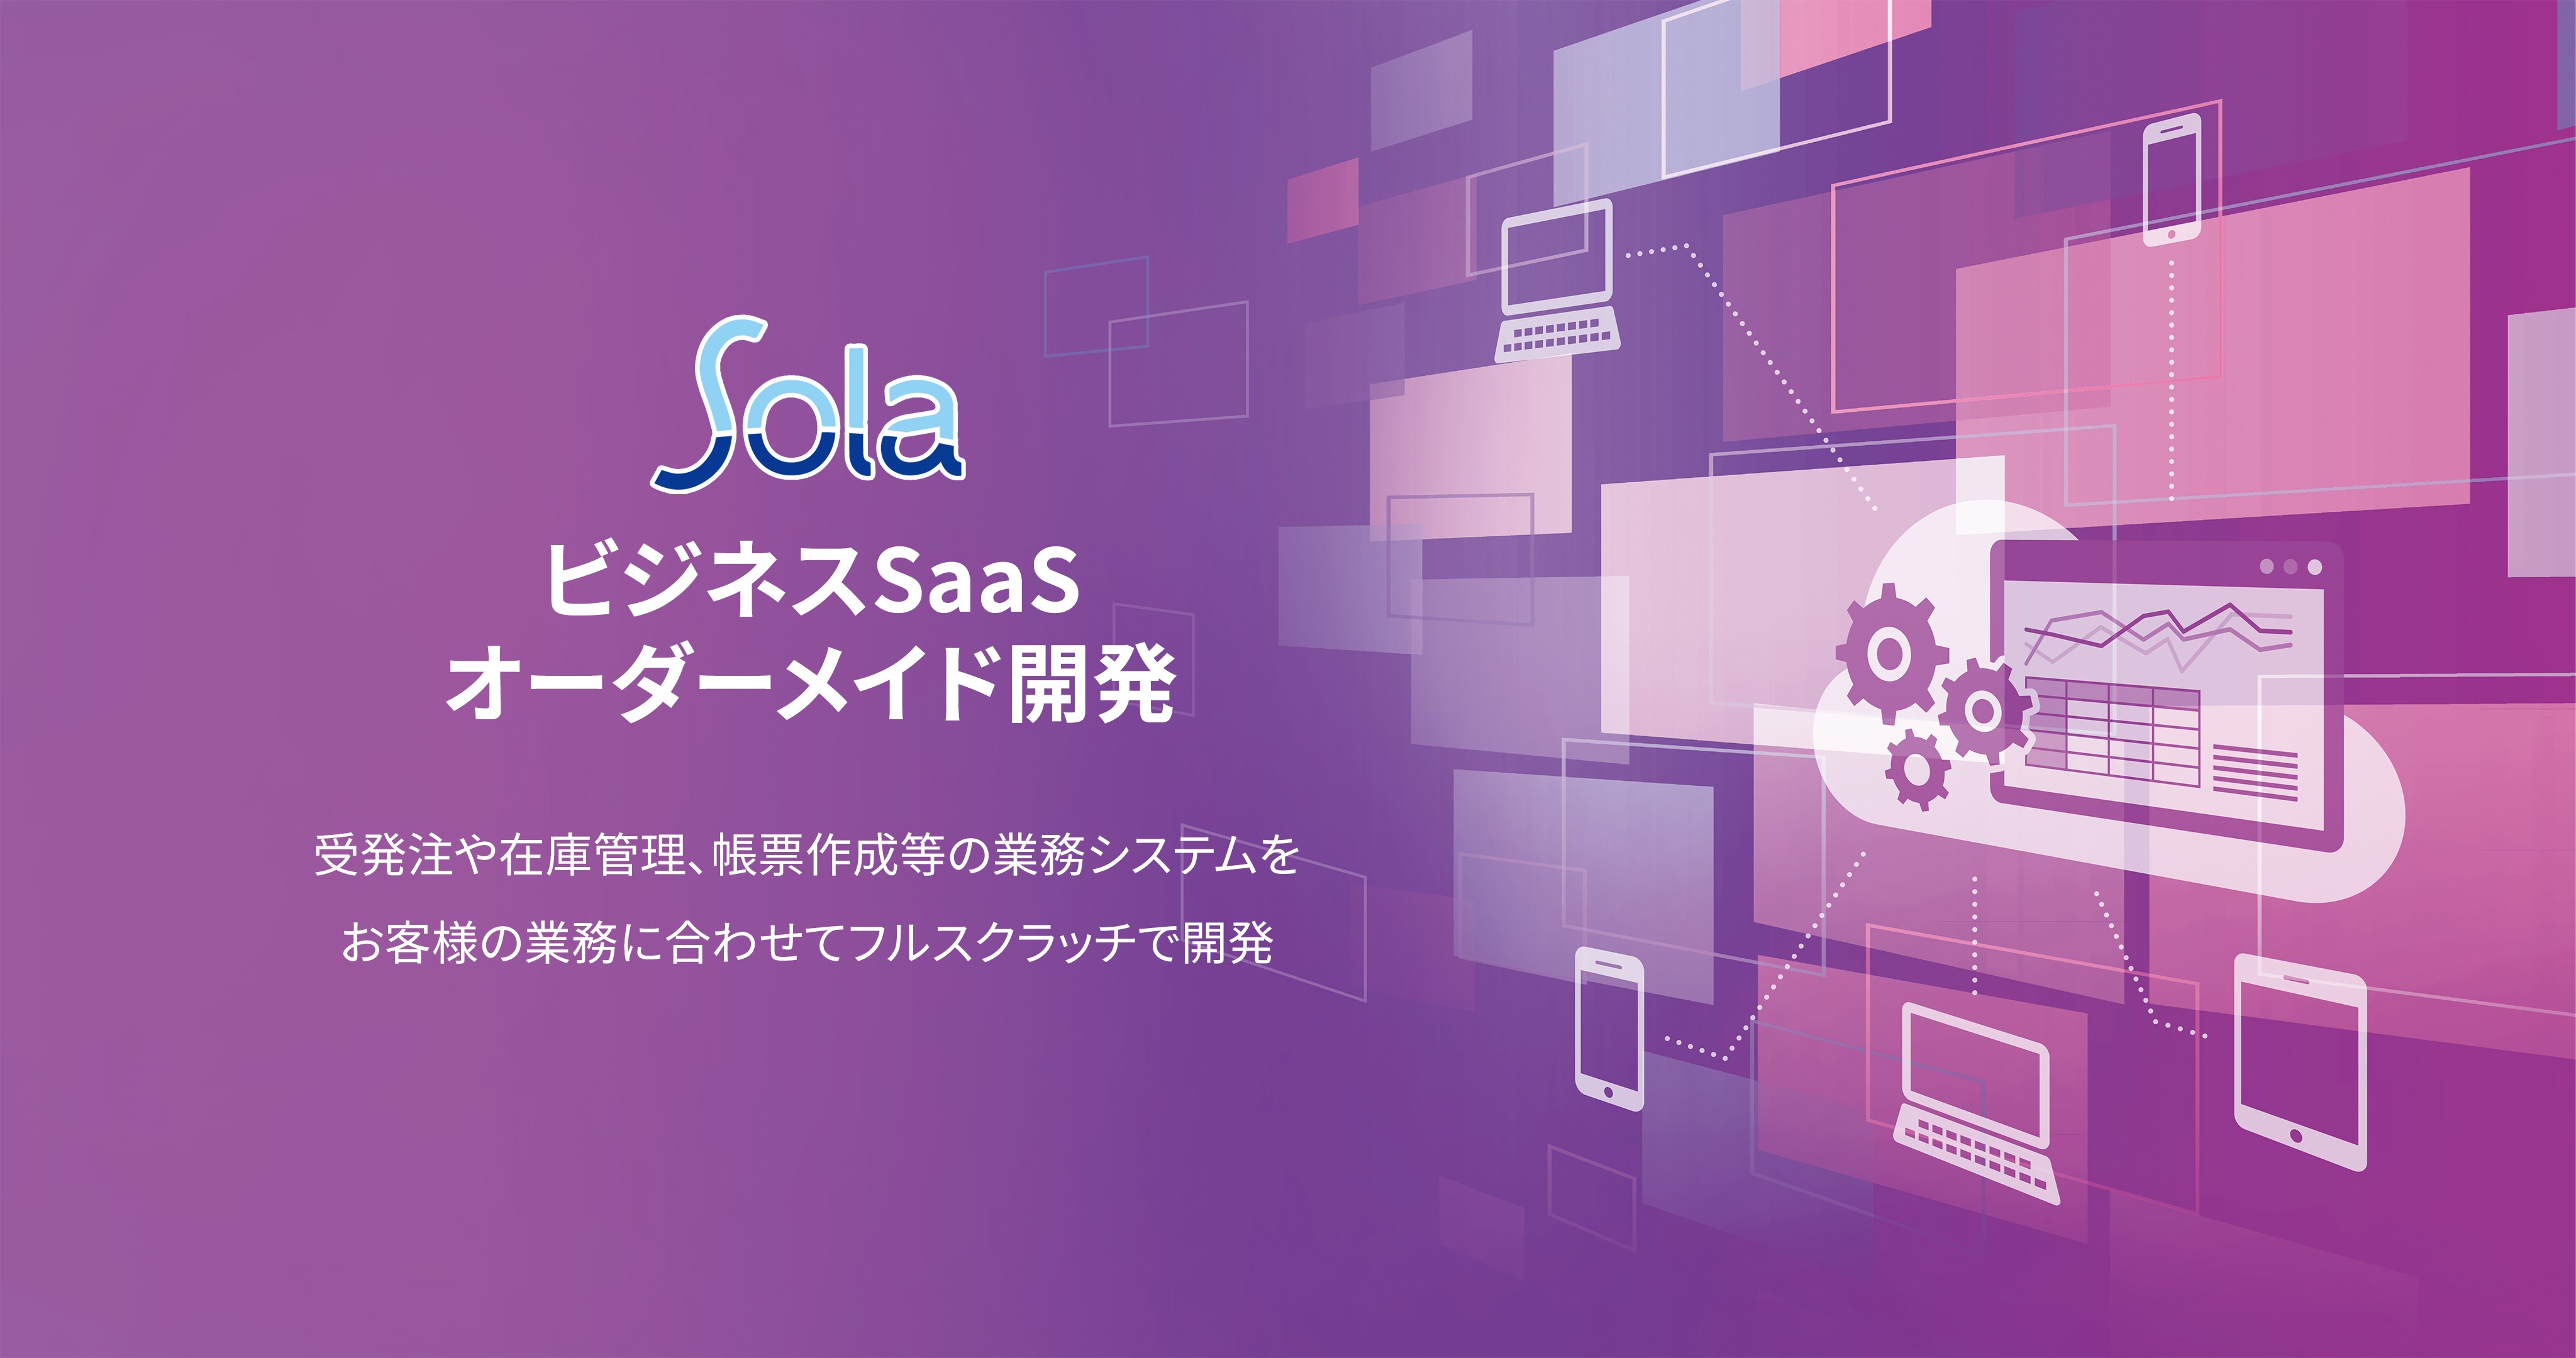 Sola株式会社のSolaサービス